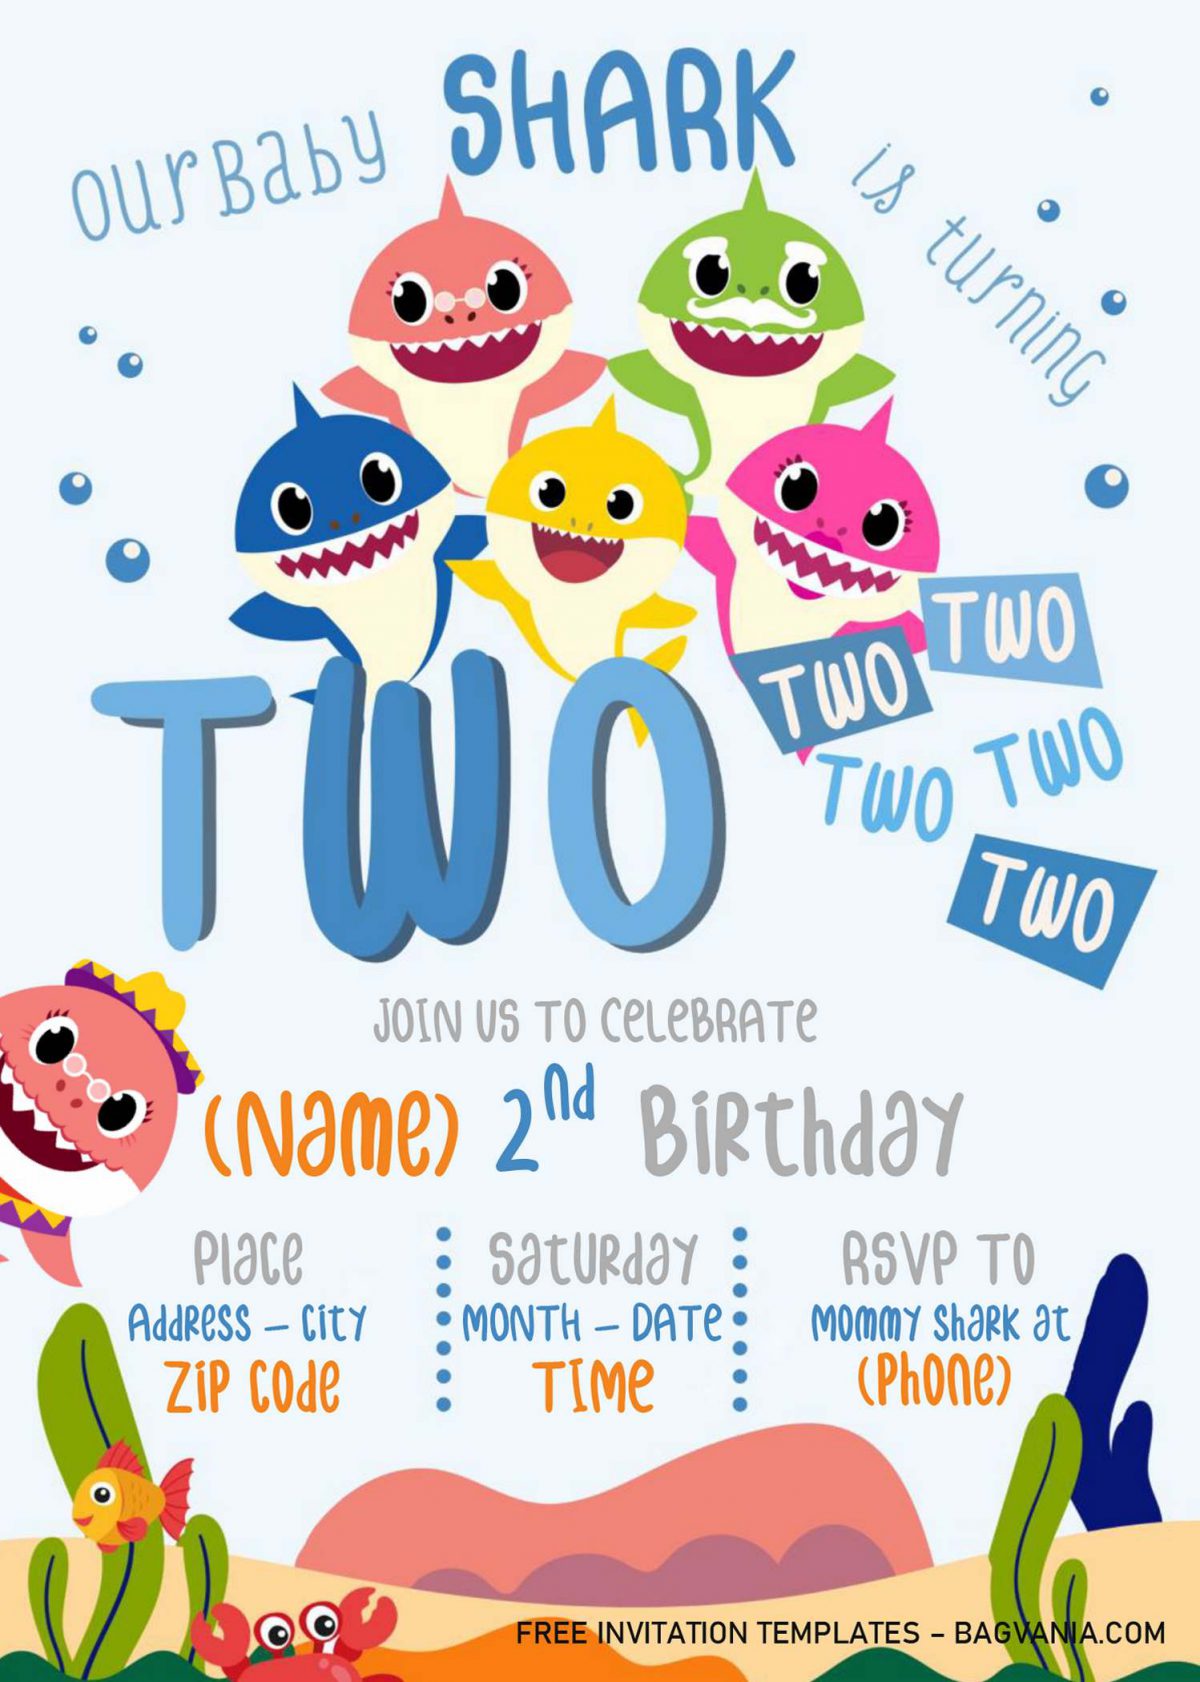 Baby Shark Birthday Invitation Templates - Editable With Microsoft Word and has grandpa and grandma shark